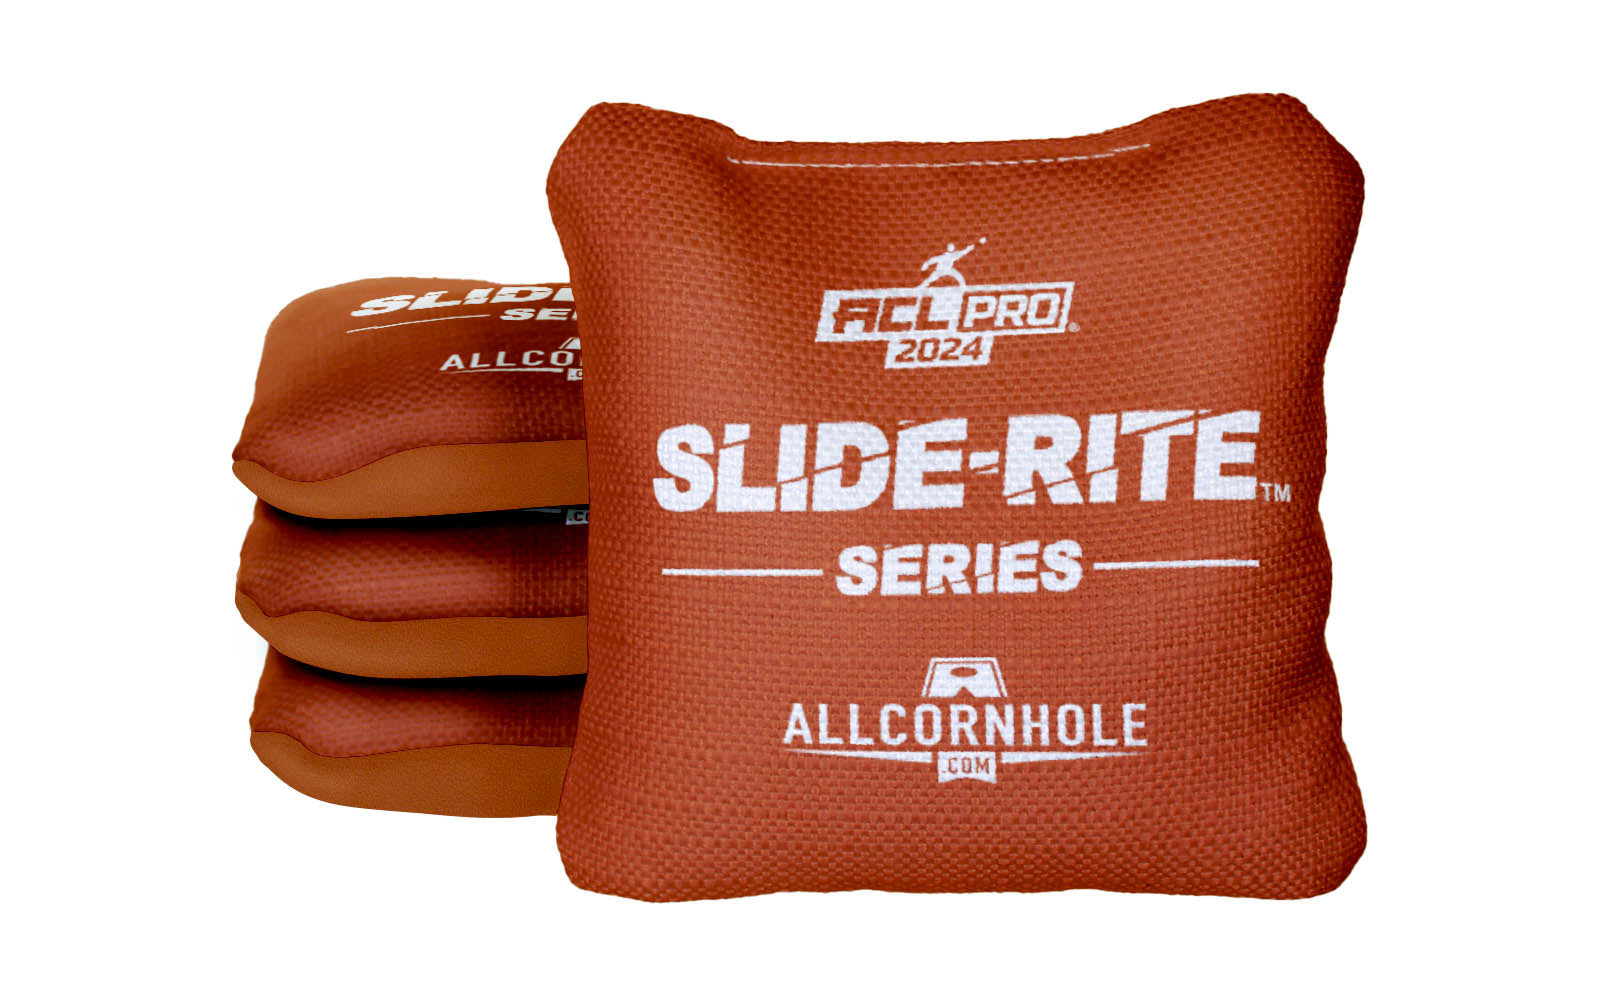 Officially Licensed Collegiate Cornhole Bags - Slide Rite - Set of 4 - University of Texas